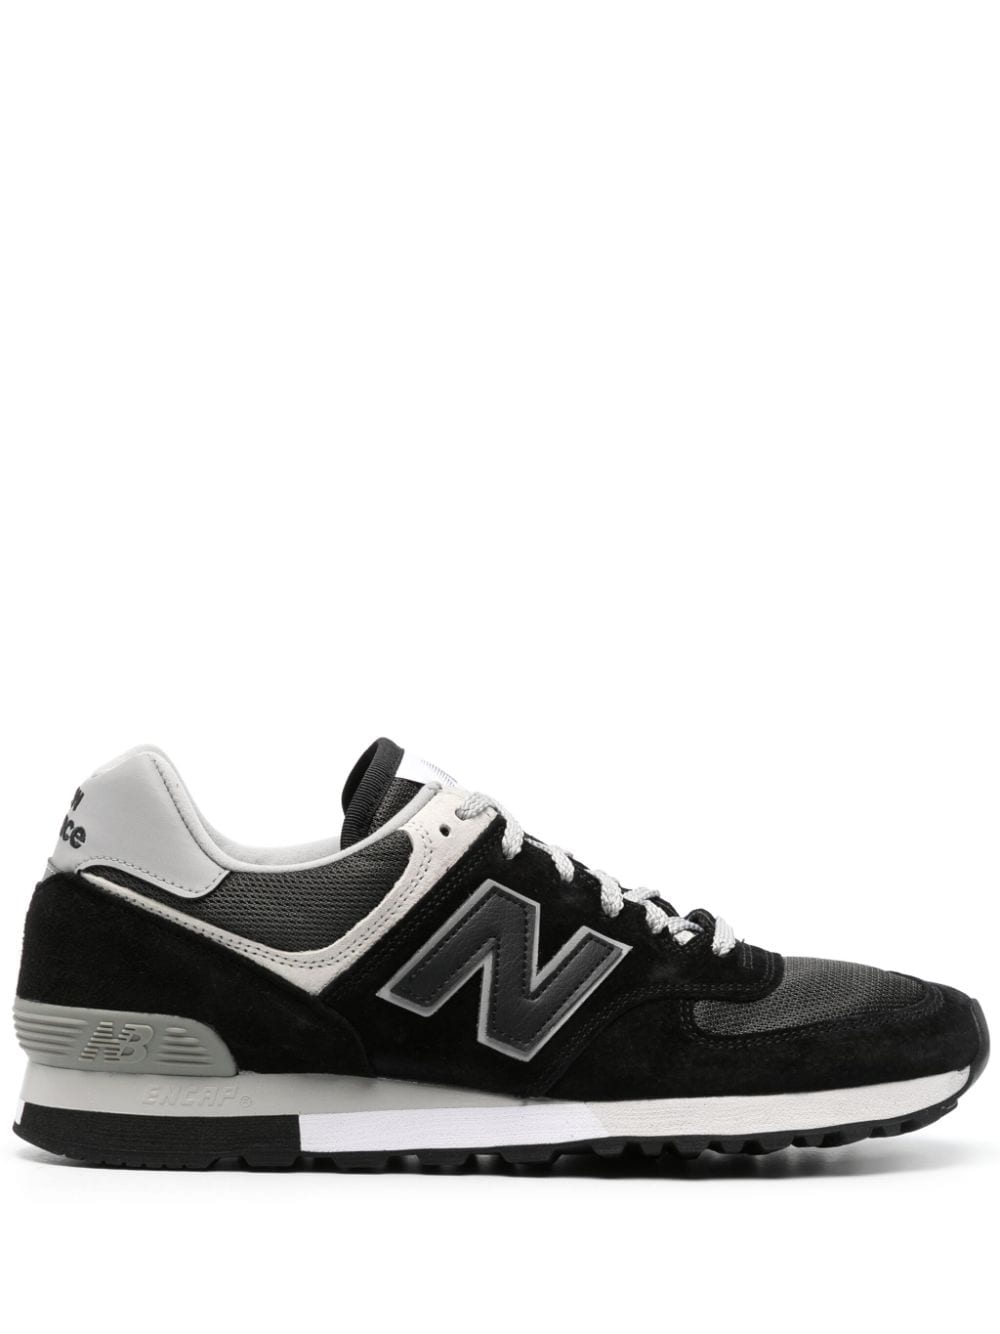 New Balance MADE in UK 576 sneakers - Black von New Balance